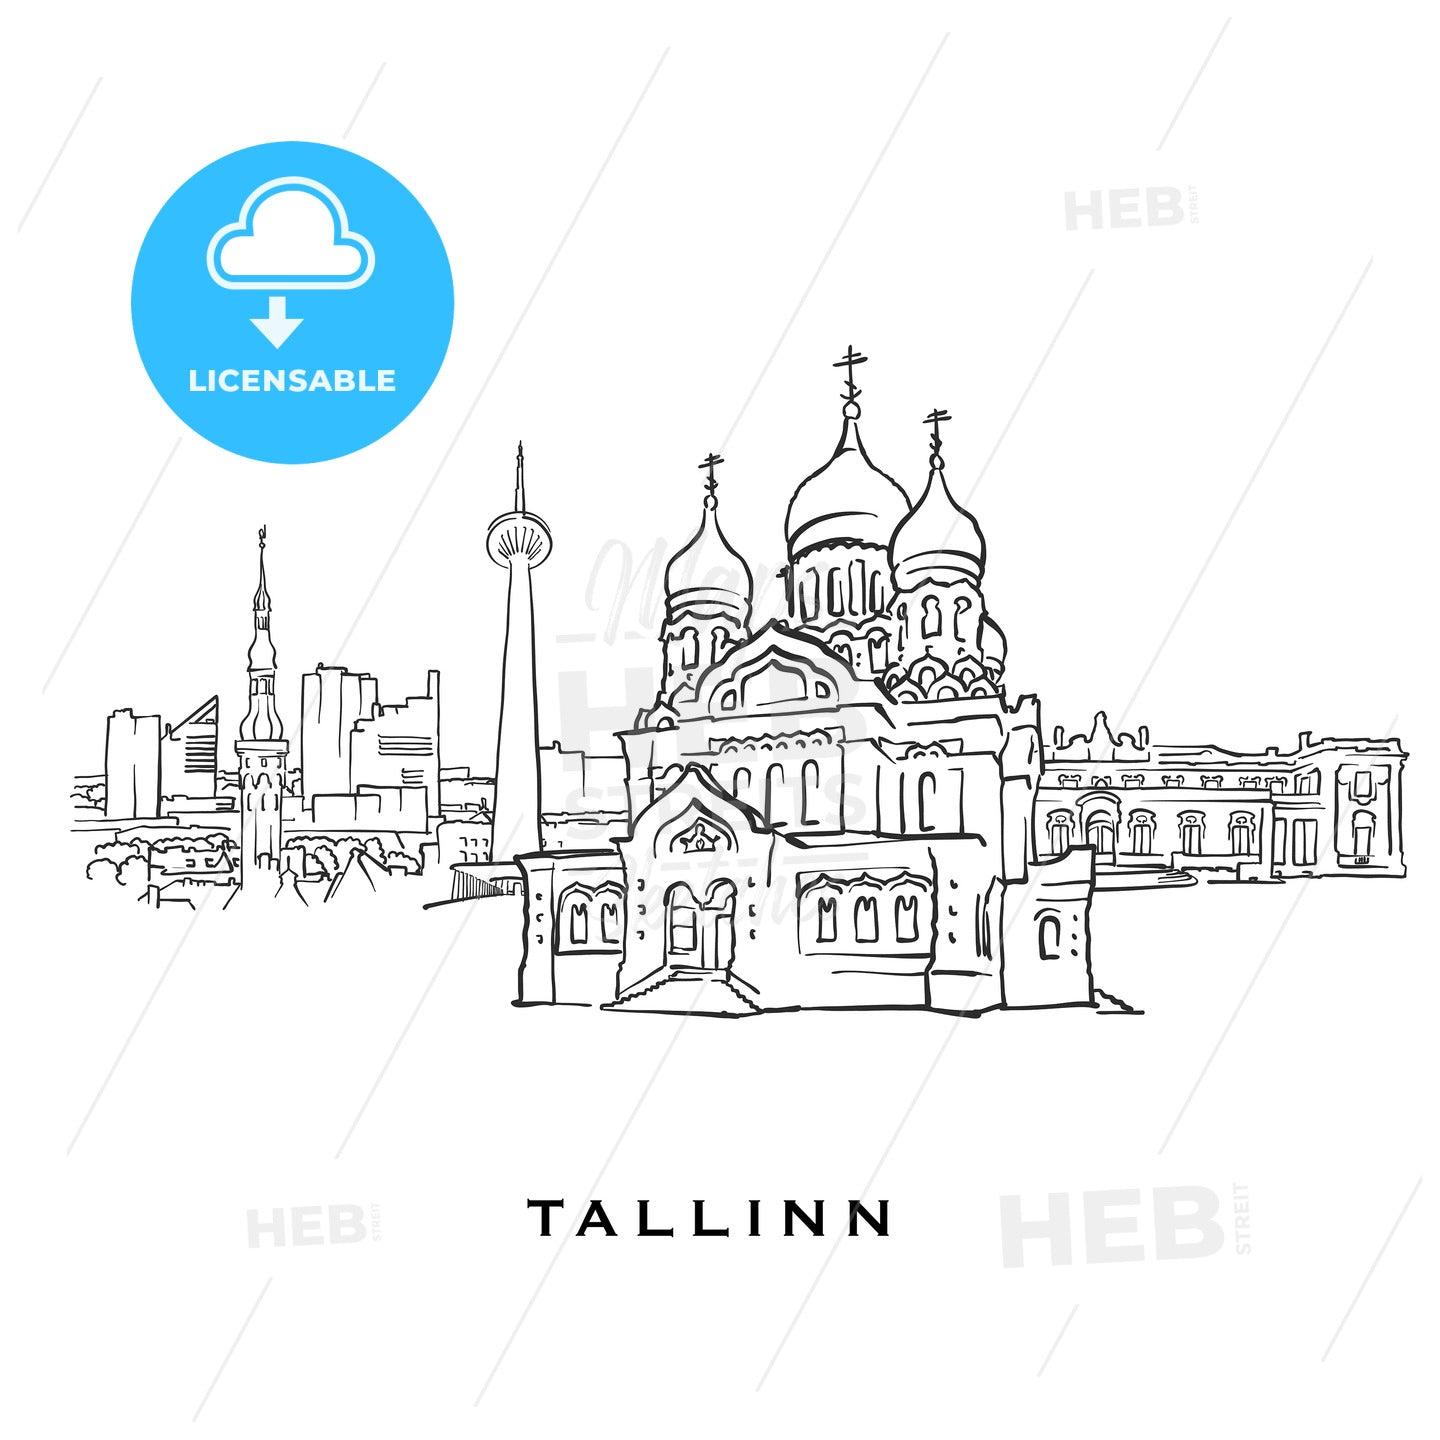 Tallinn Estonia famous architecture – instant download